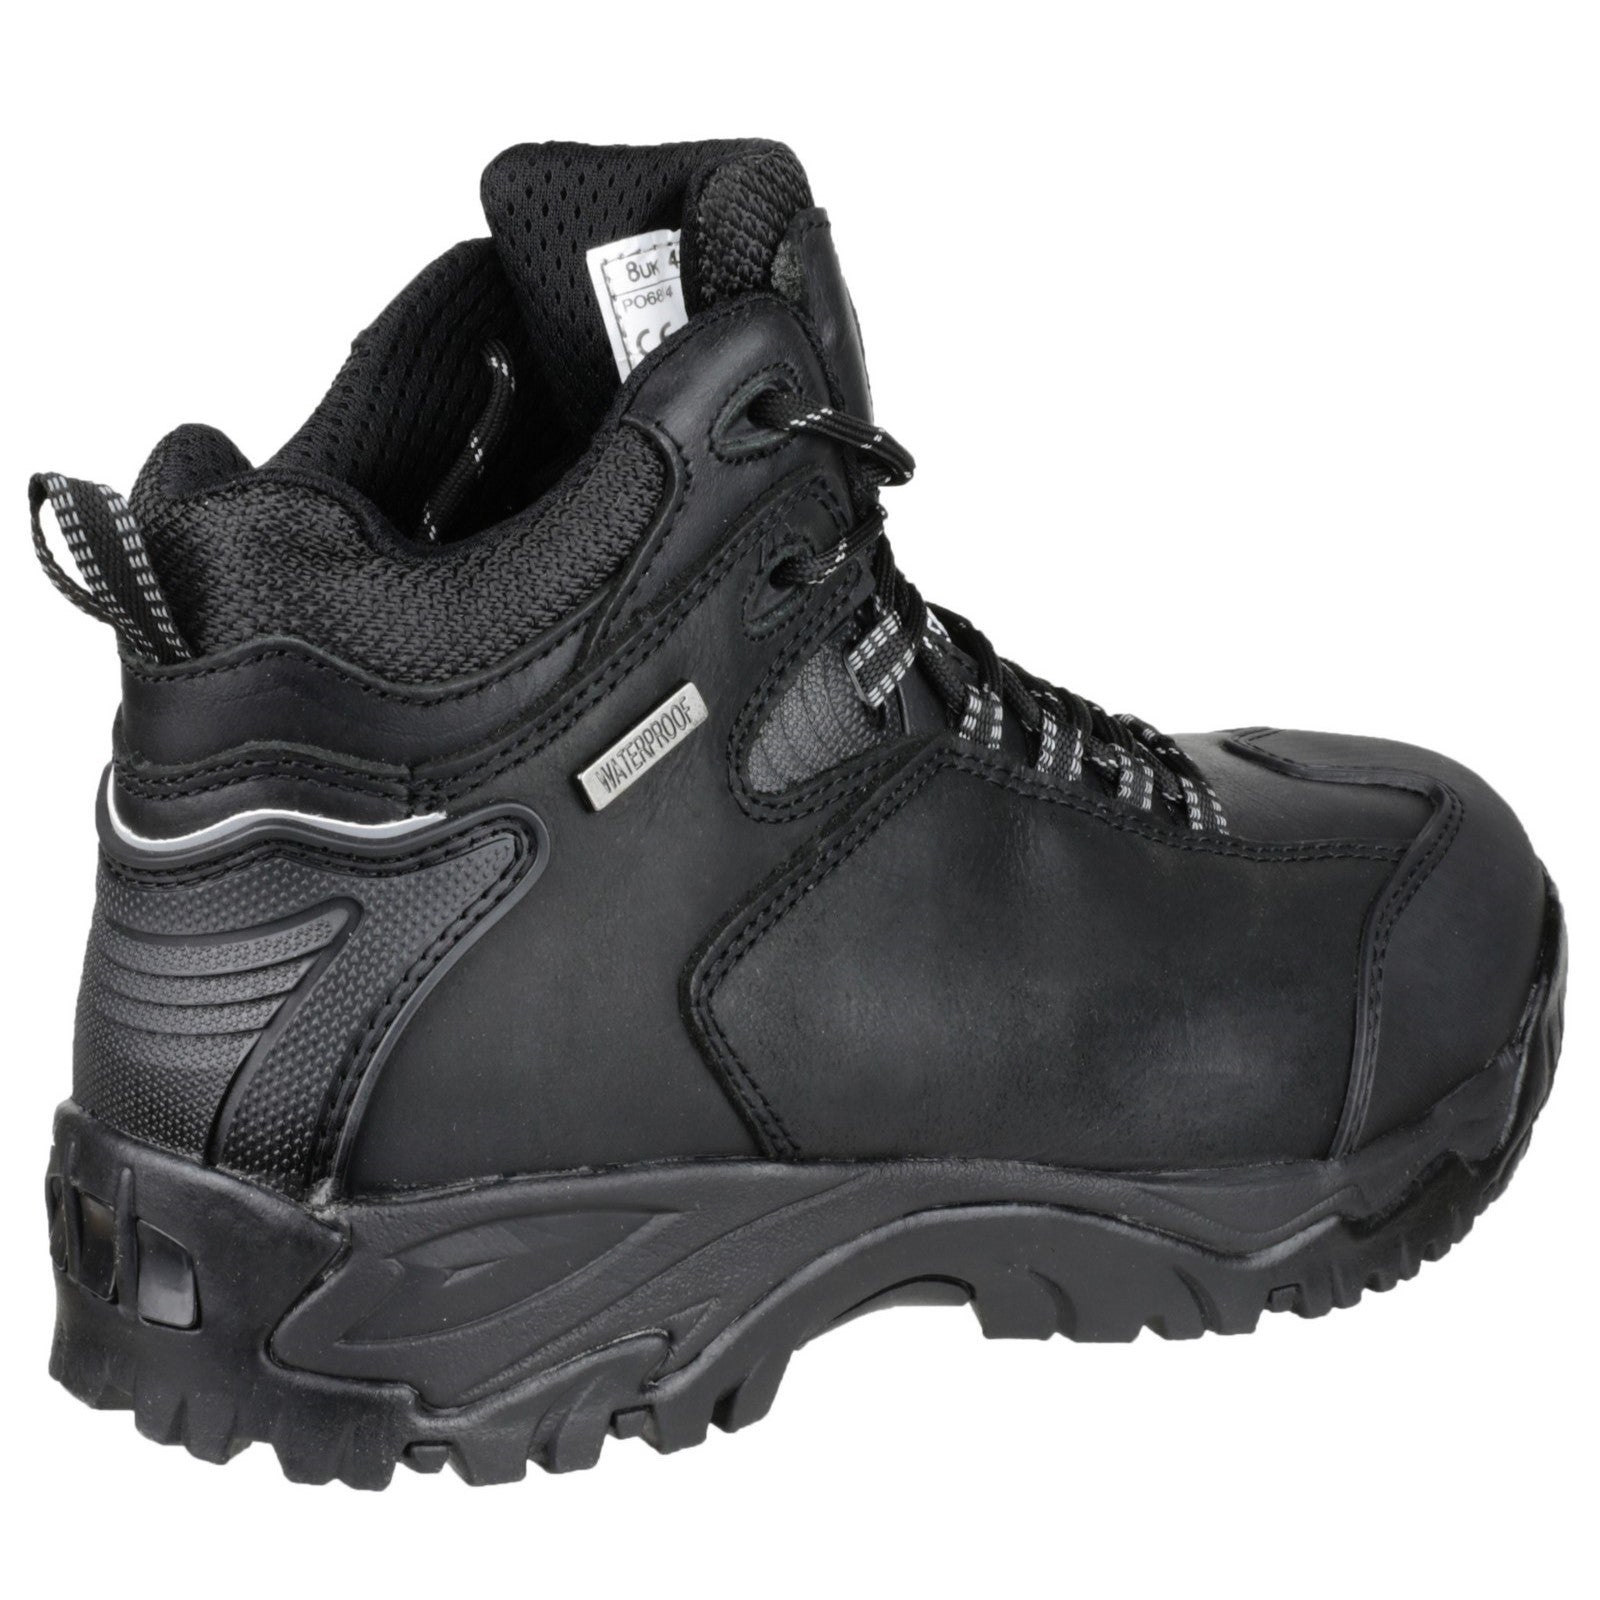 Amblers FS190N Hiker Safety Boot